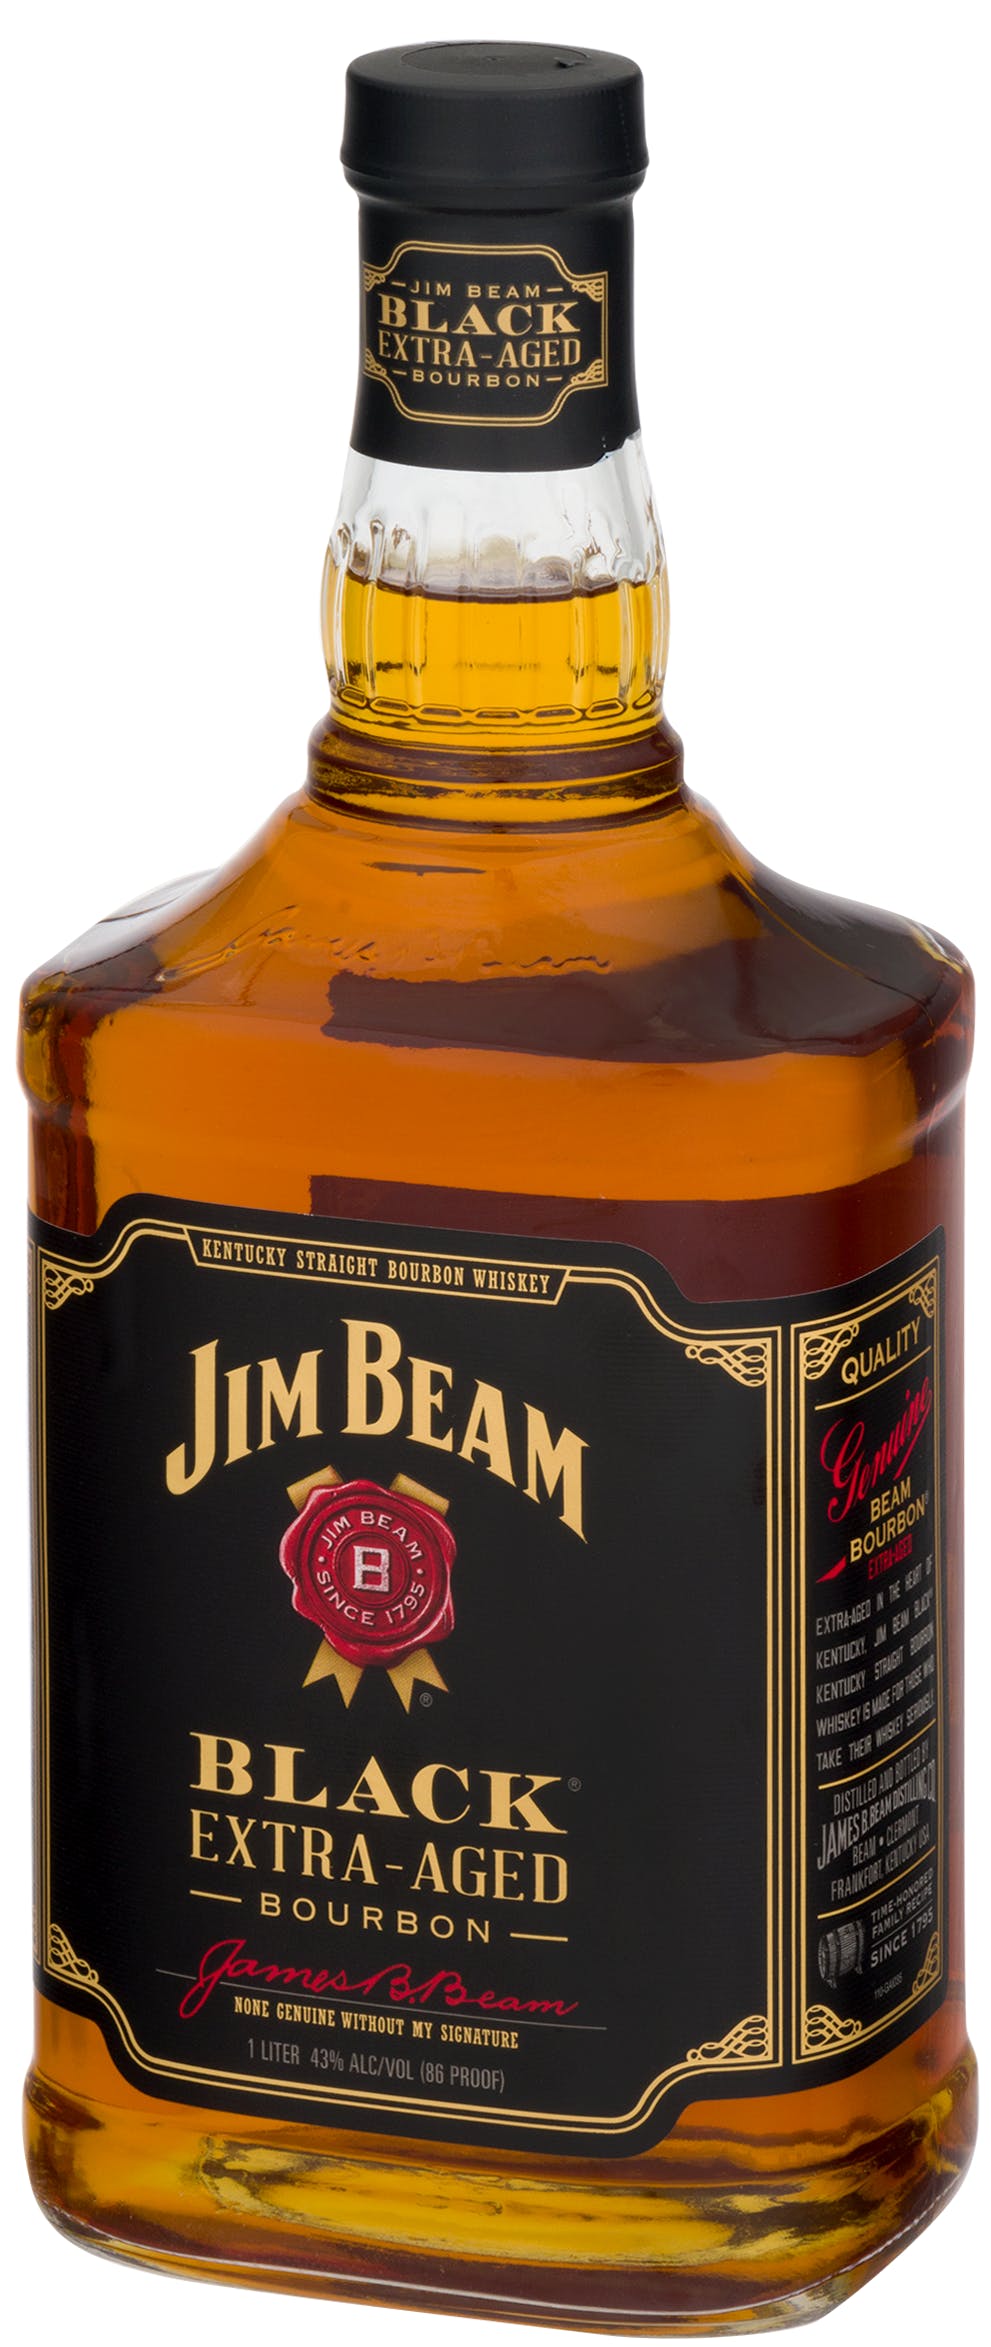 Jim Beam Black Triple Aged Bourbon Whiskey, Whisky Américain 43